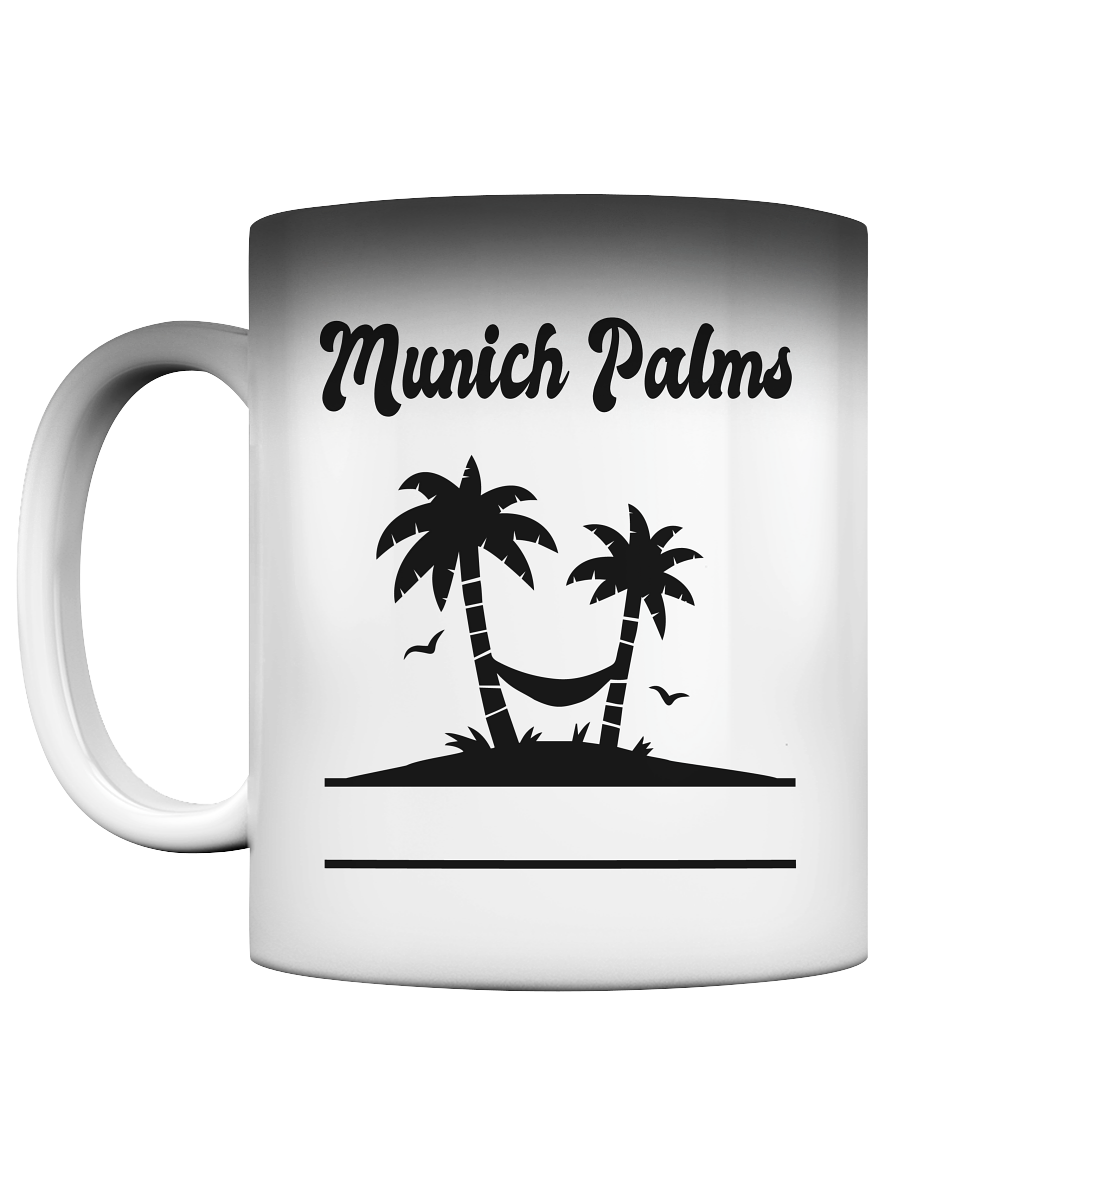 Design Munich Palms  - Magic Mug